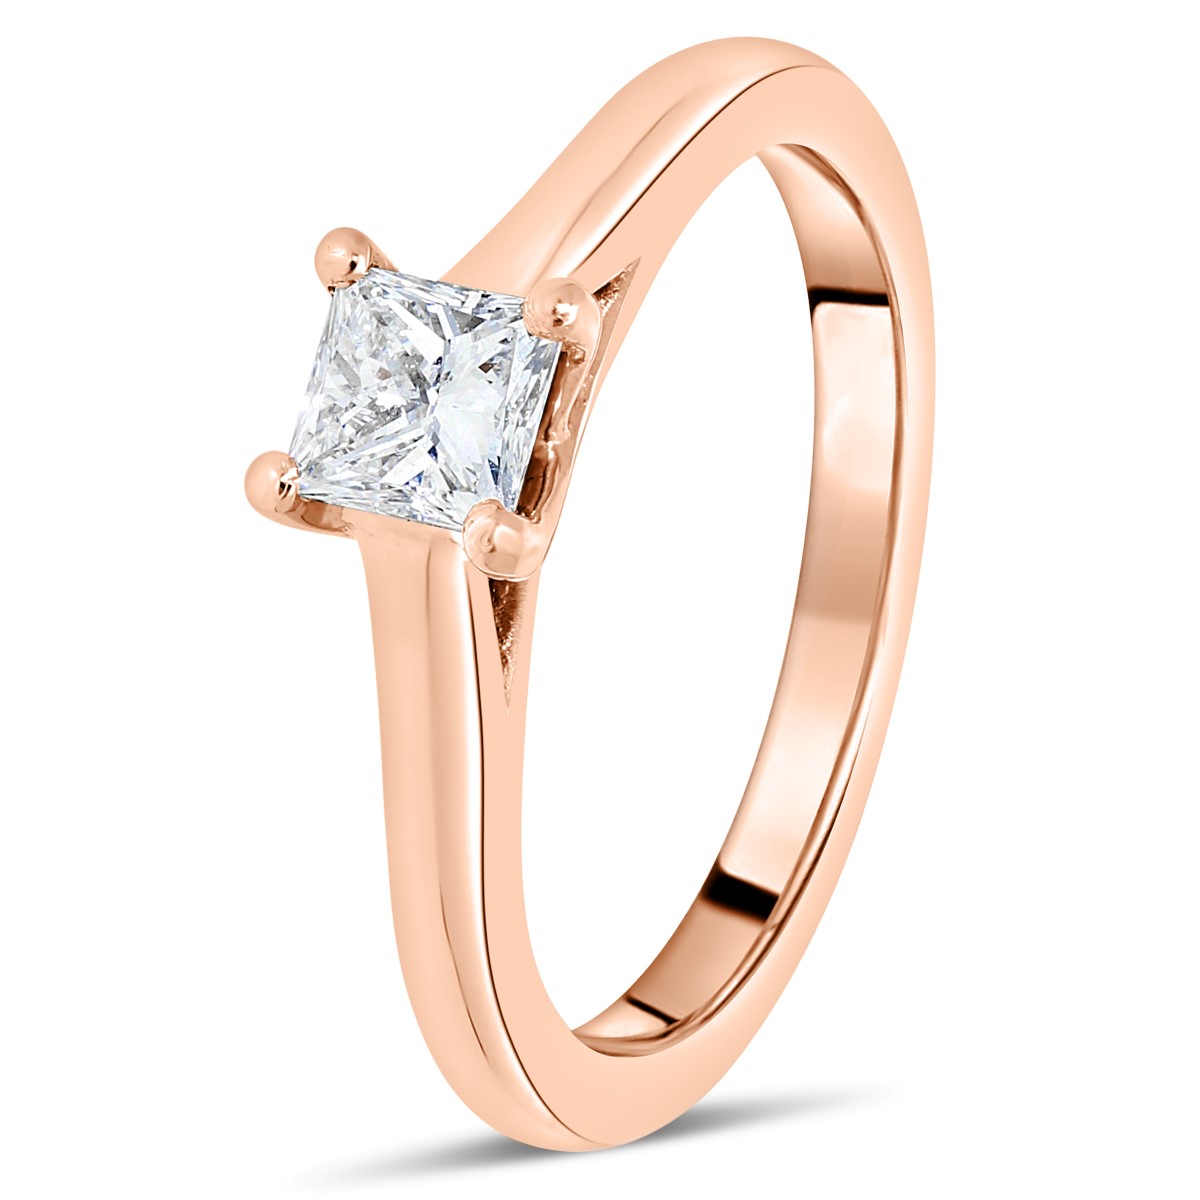 st-martin-r-pr-solitaires-diamants-certifies-style-classique-or-rose-750-